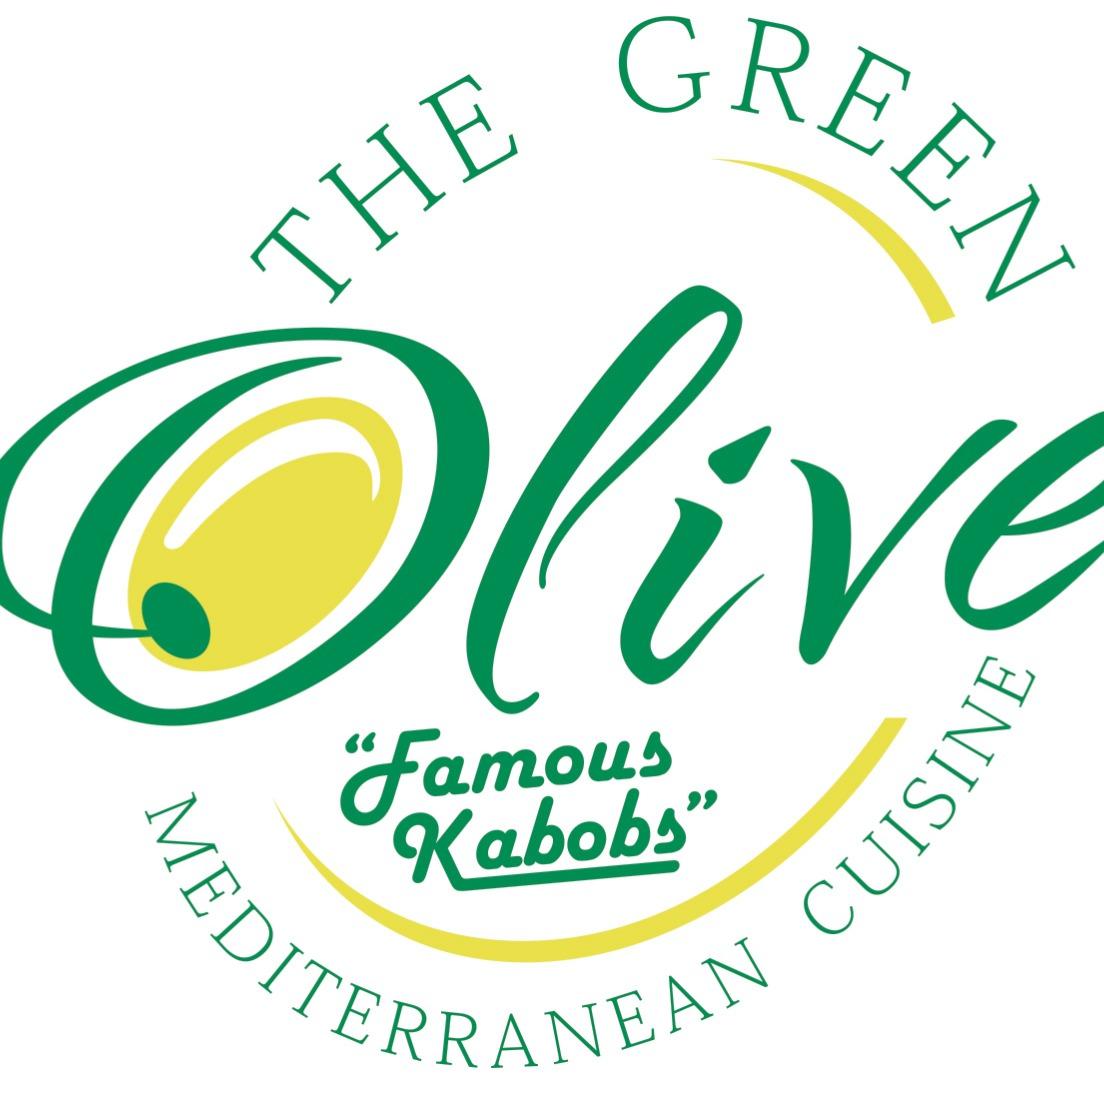 The Green Olive Santa Ana